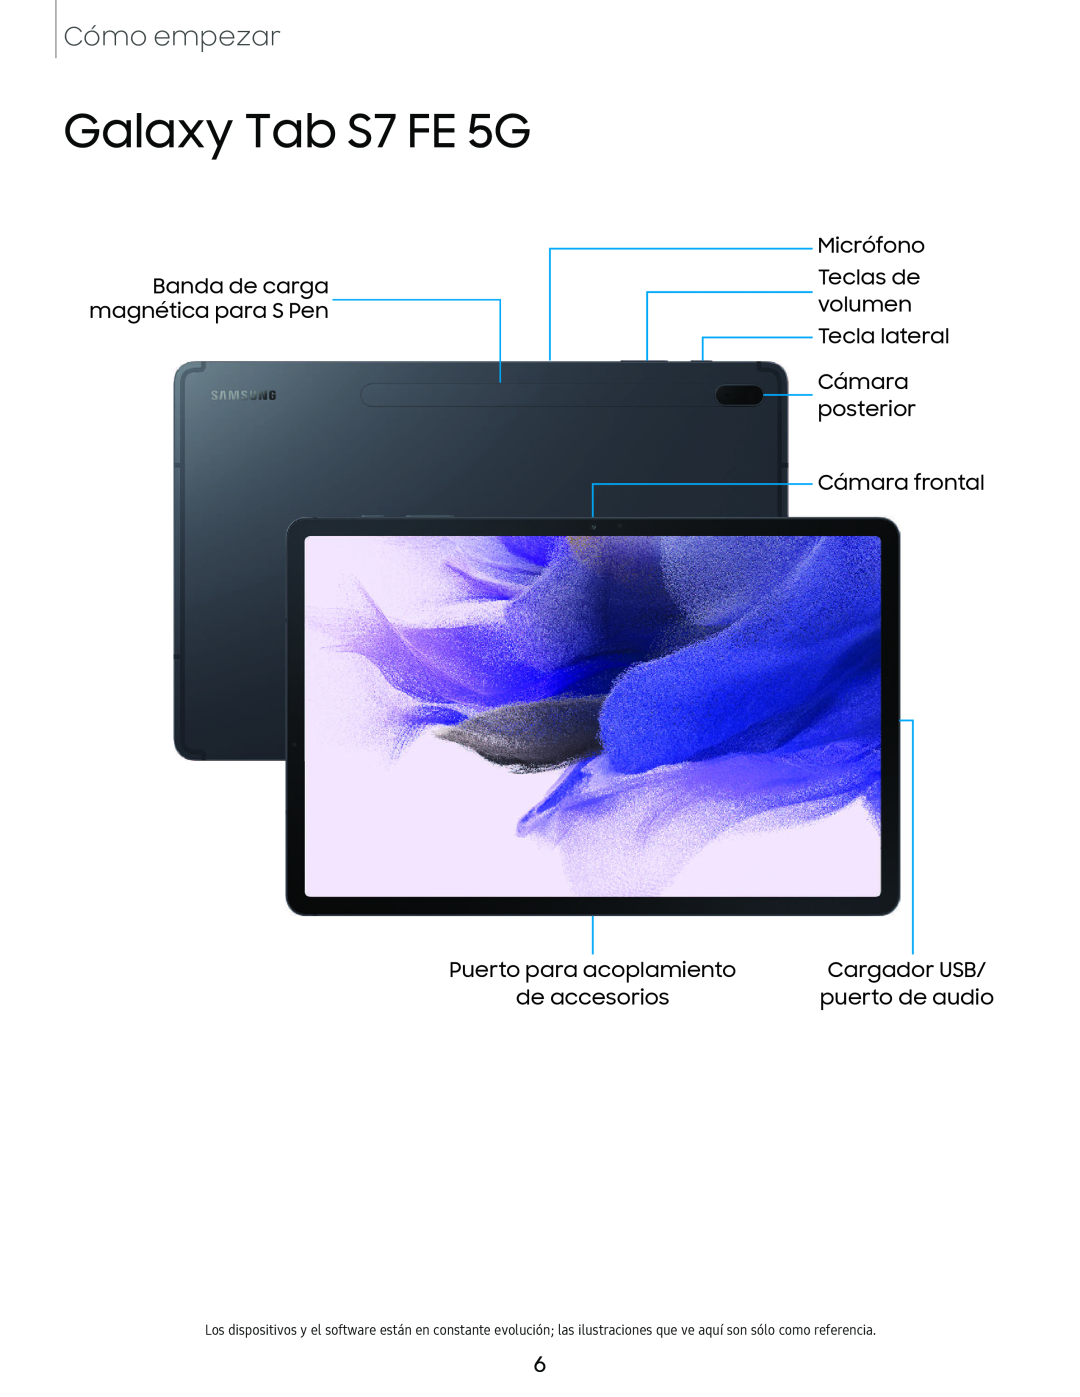 Galaxy Tab S7 FE 5G Galaxy Tab S7 FE Verizon